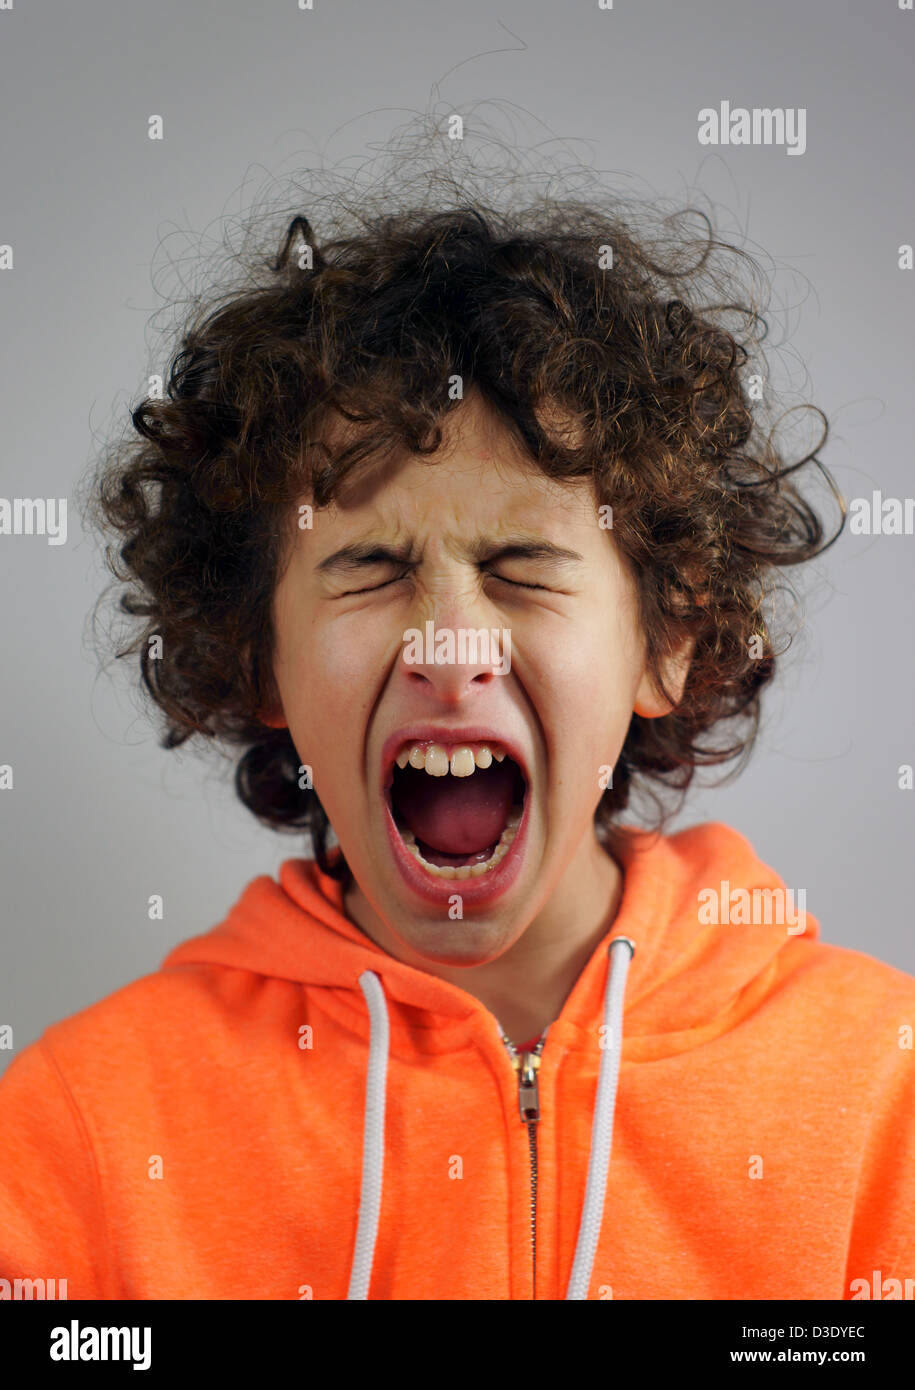 Screaming boy Stock Photo